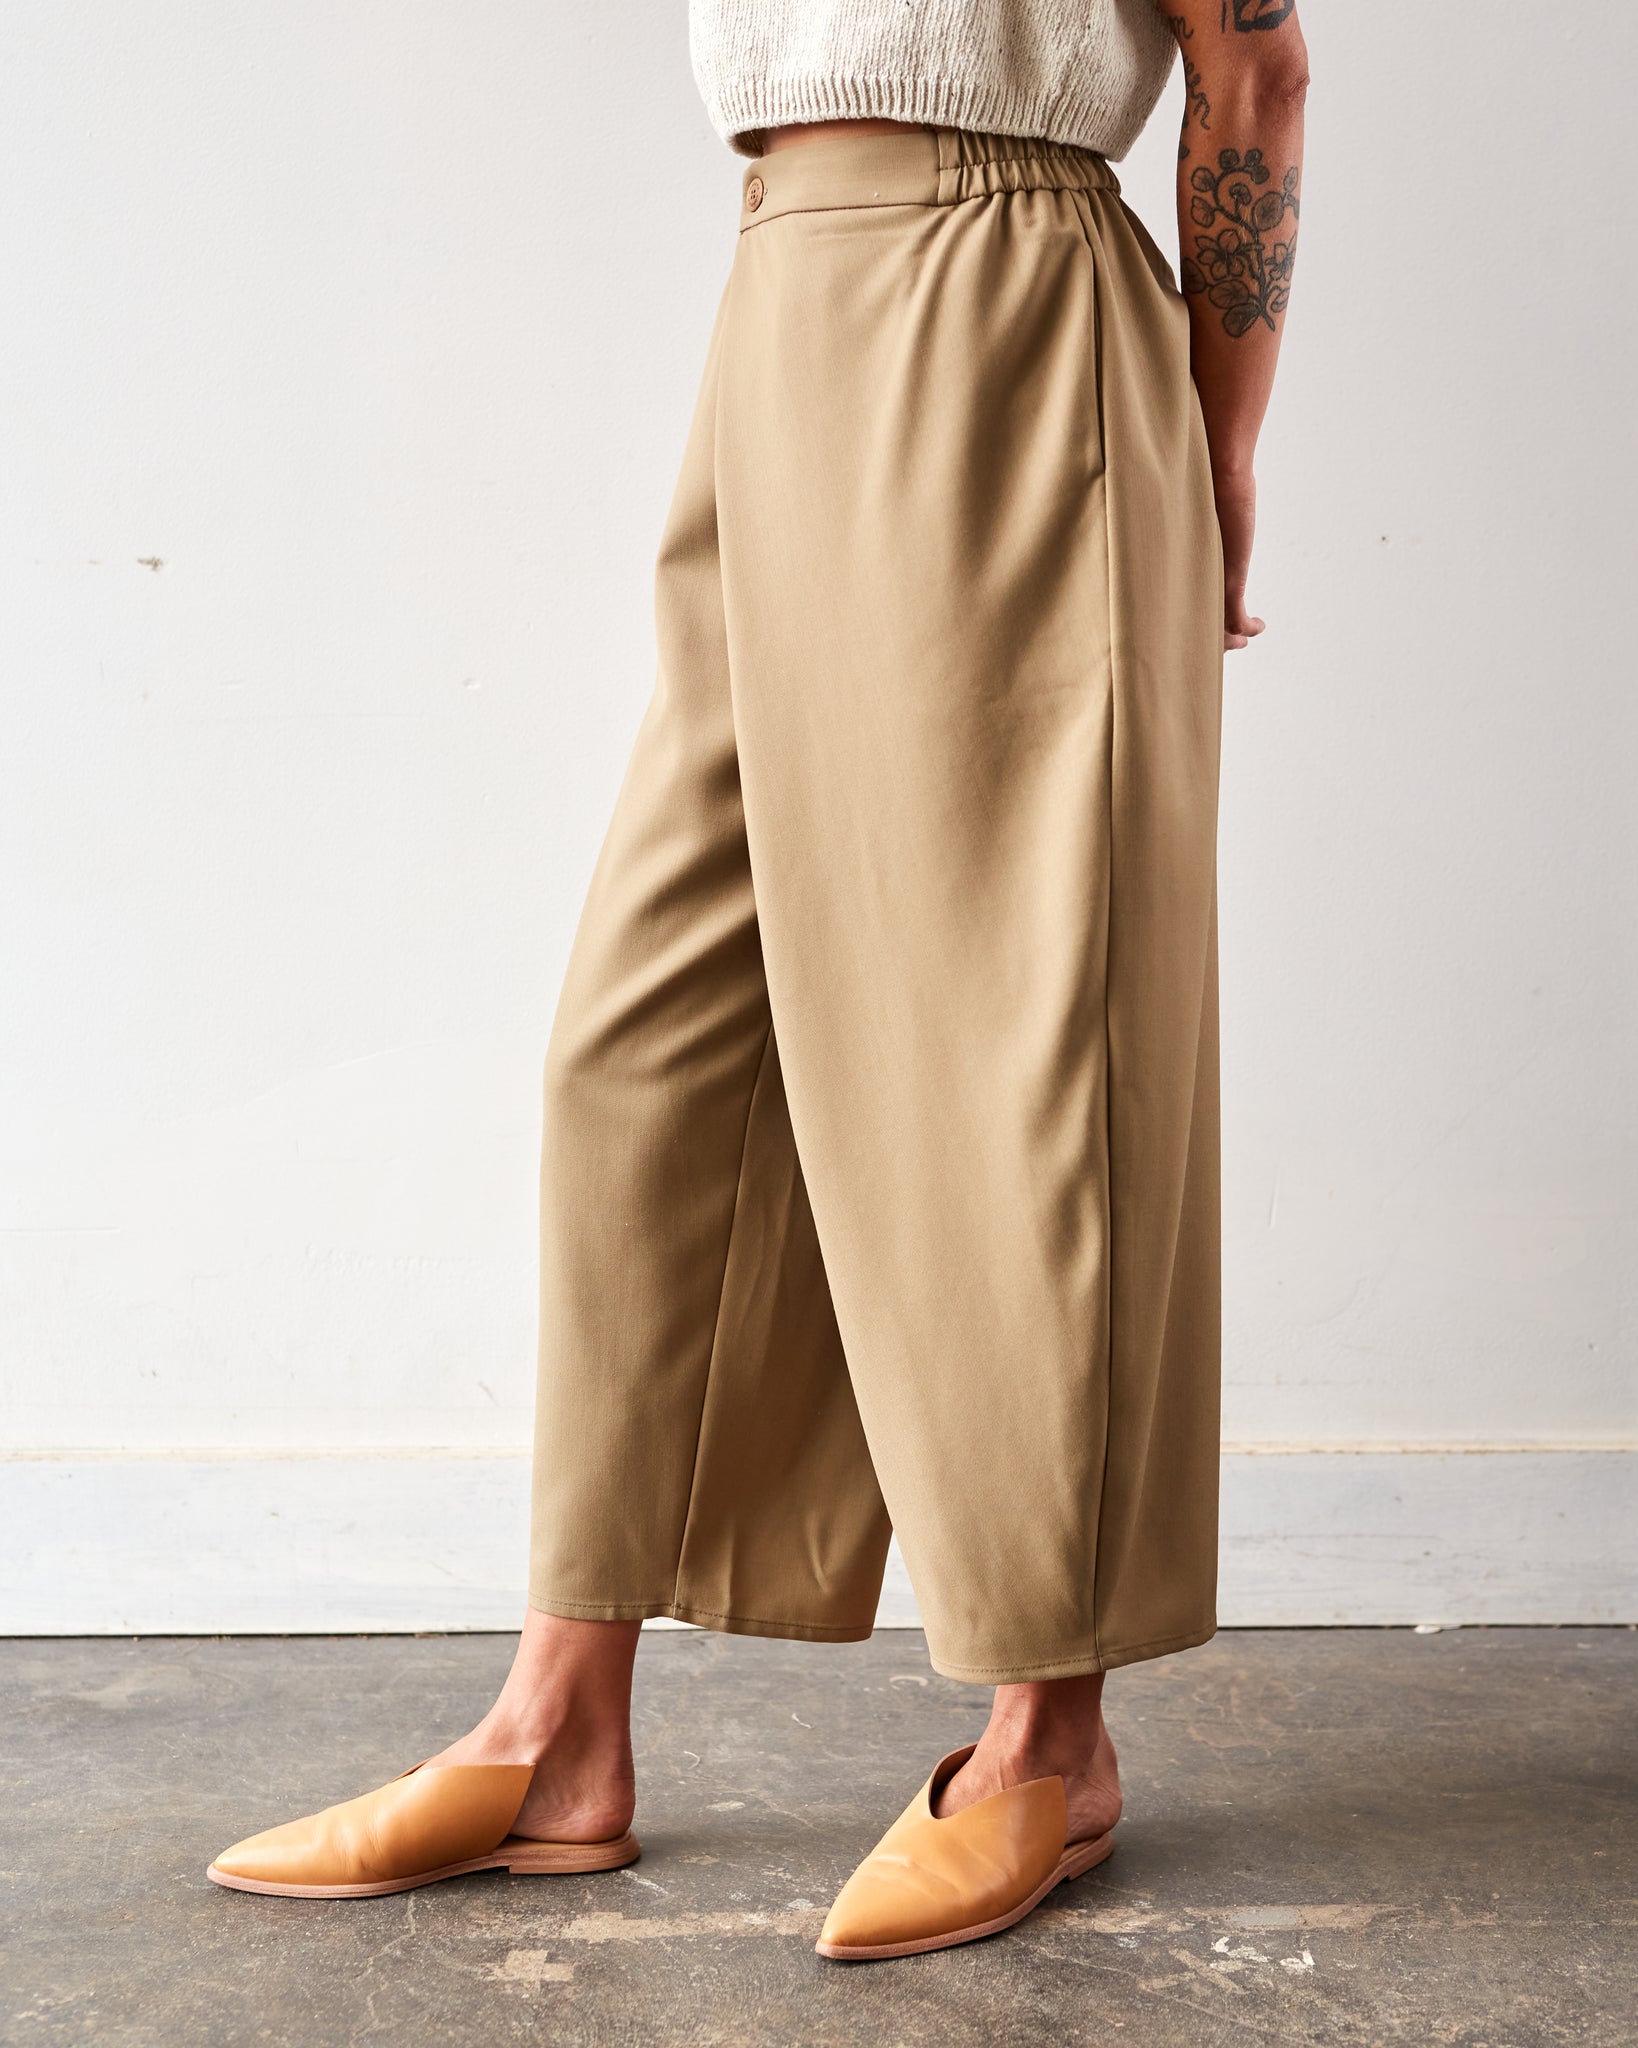 Cordera Tailoring Paero Pants, Khaki